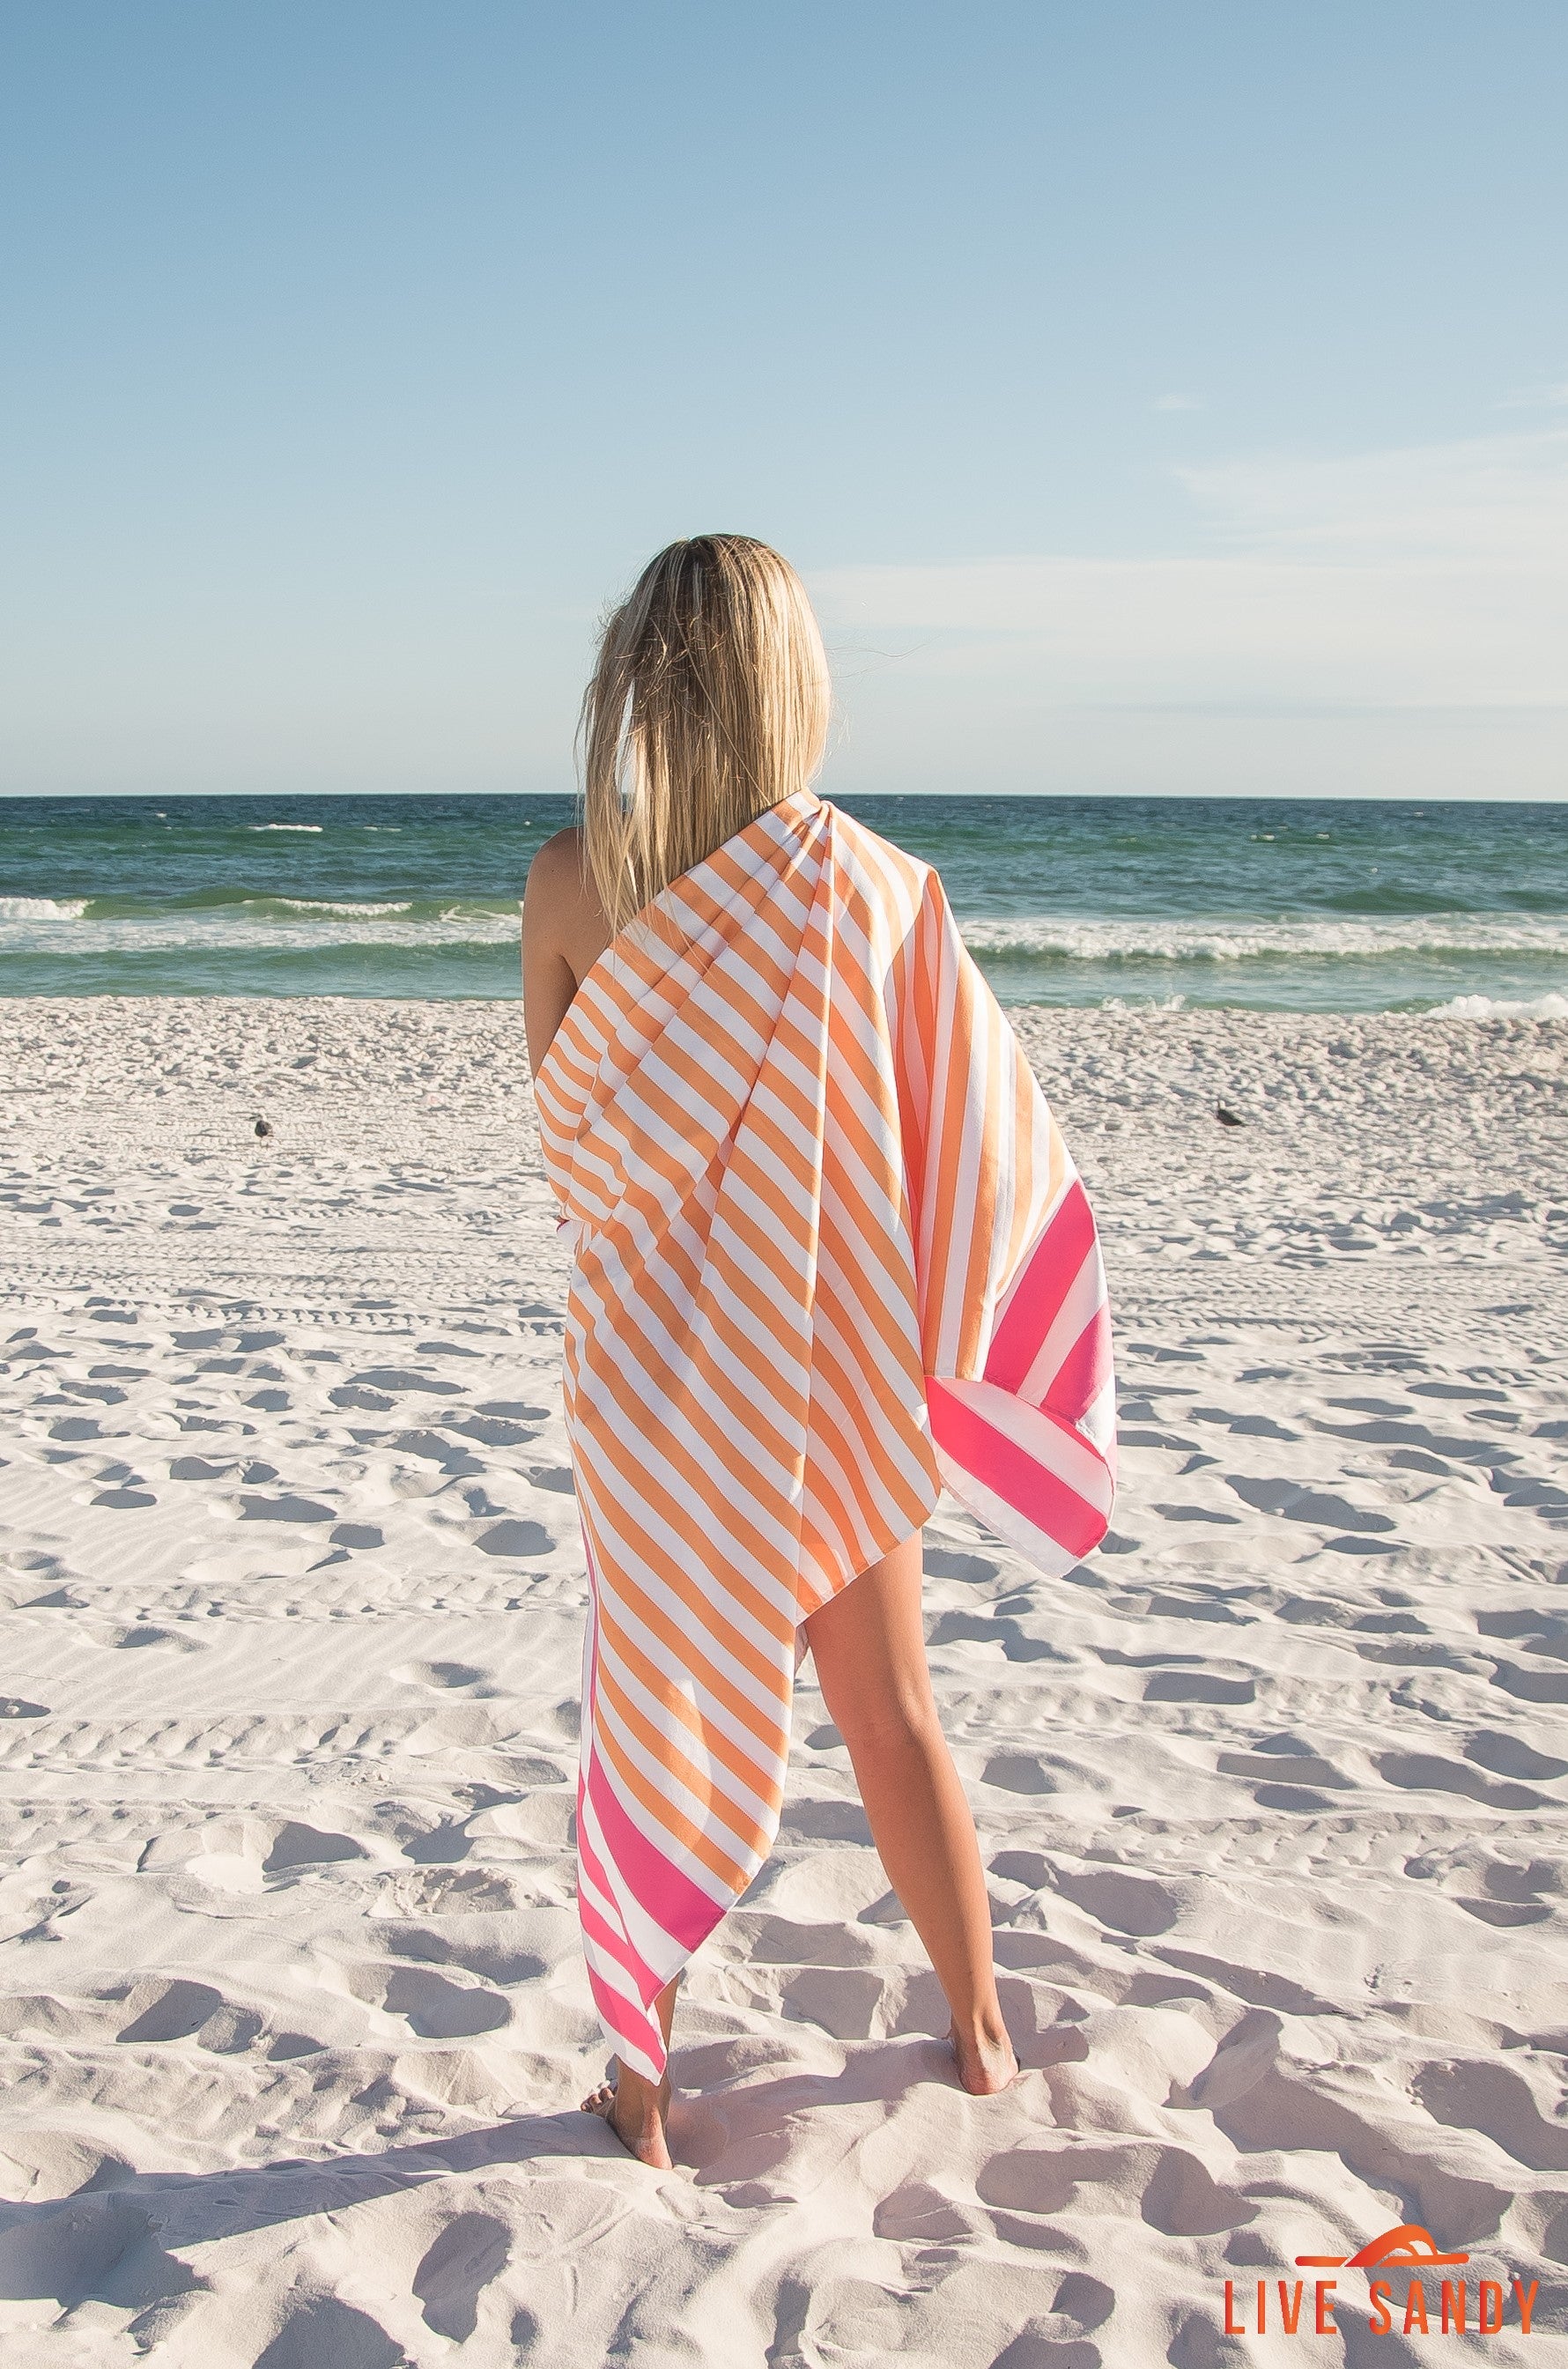 Peach Beach - Quick Dry Towel - Live Sandy